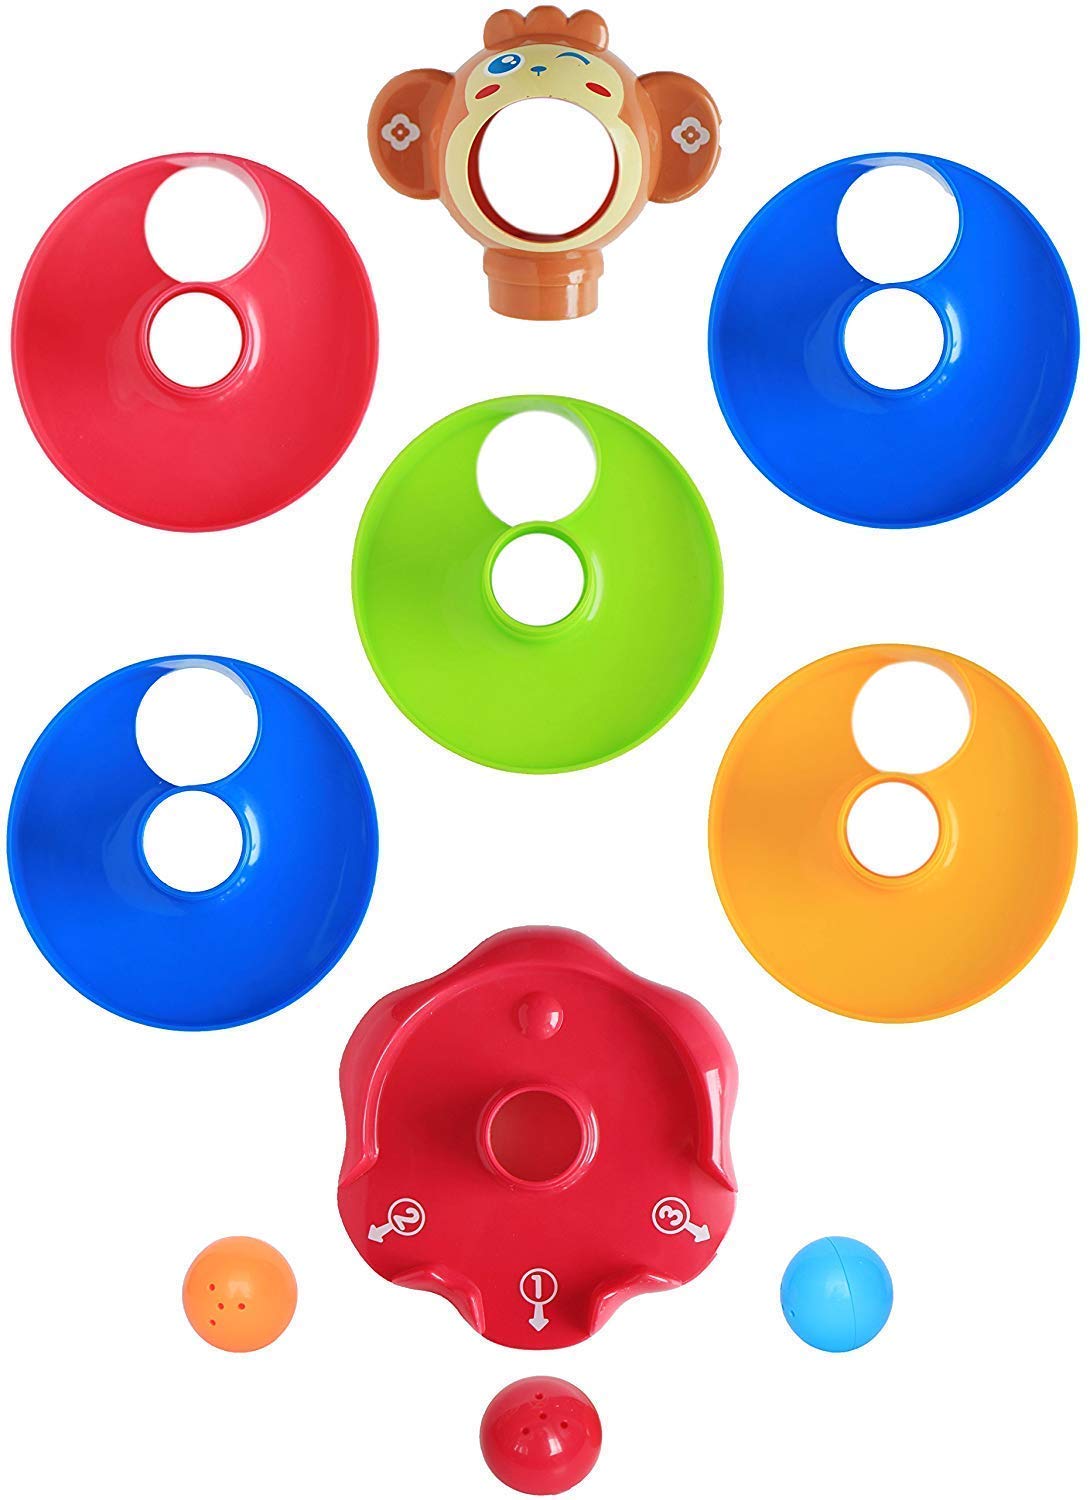 BrightStart Monkey Ball Drop Toy - 5-Layer Swirling Tower